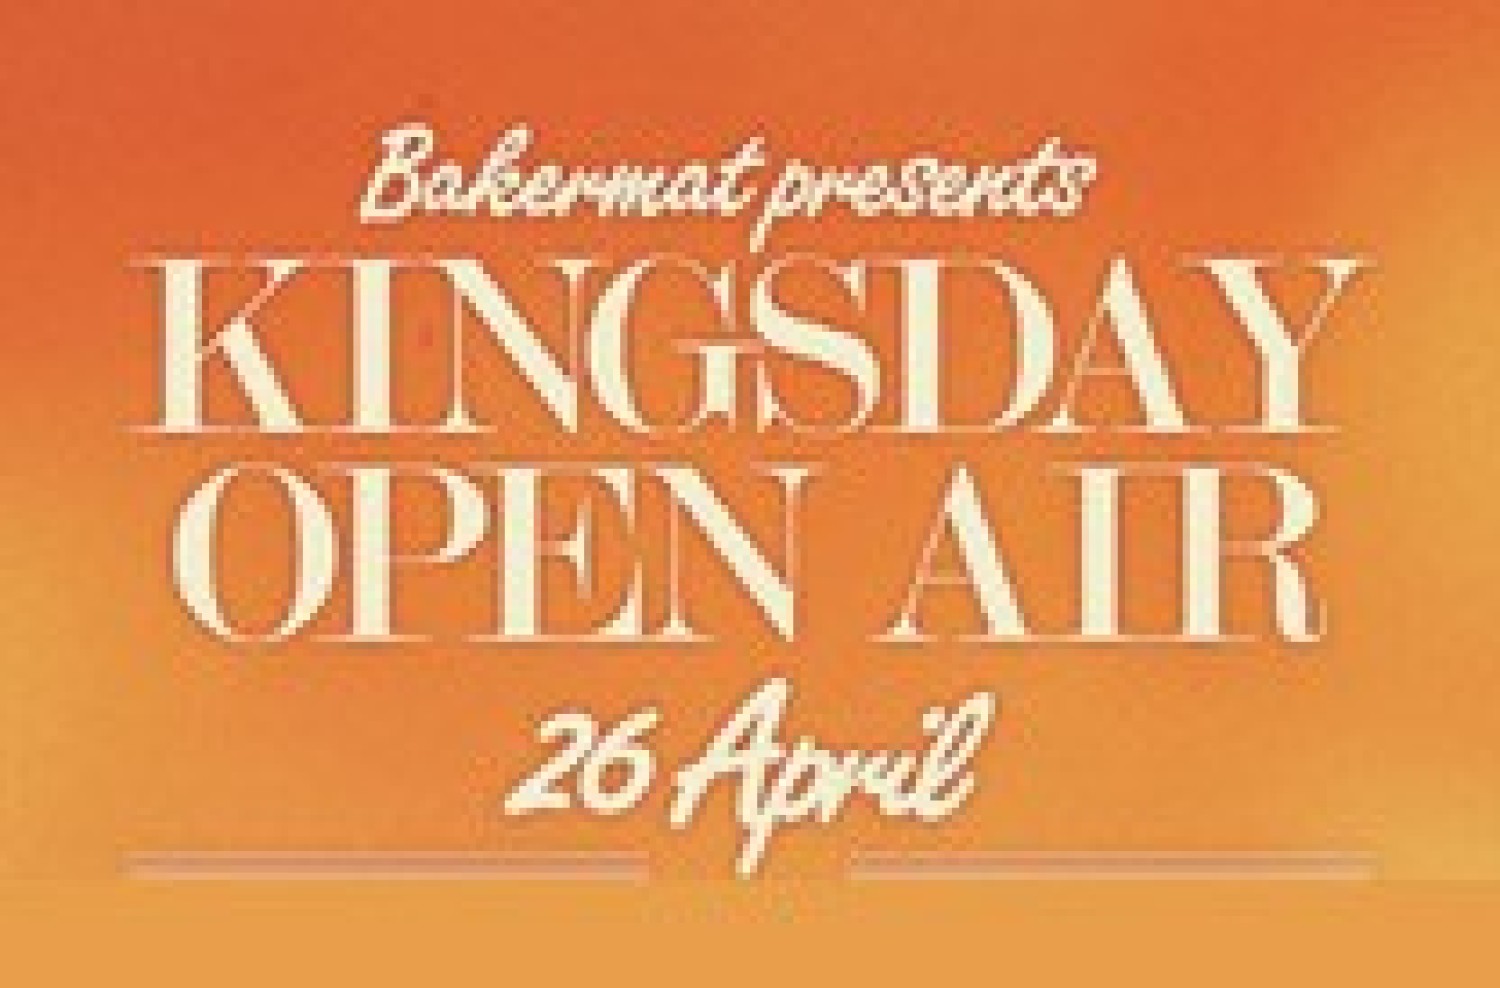 Party report: Bakermat presents Kingsday Open AIR, Naritaweg, 26 april 2014